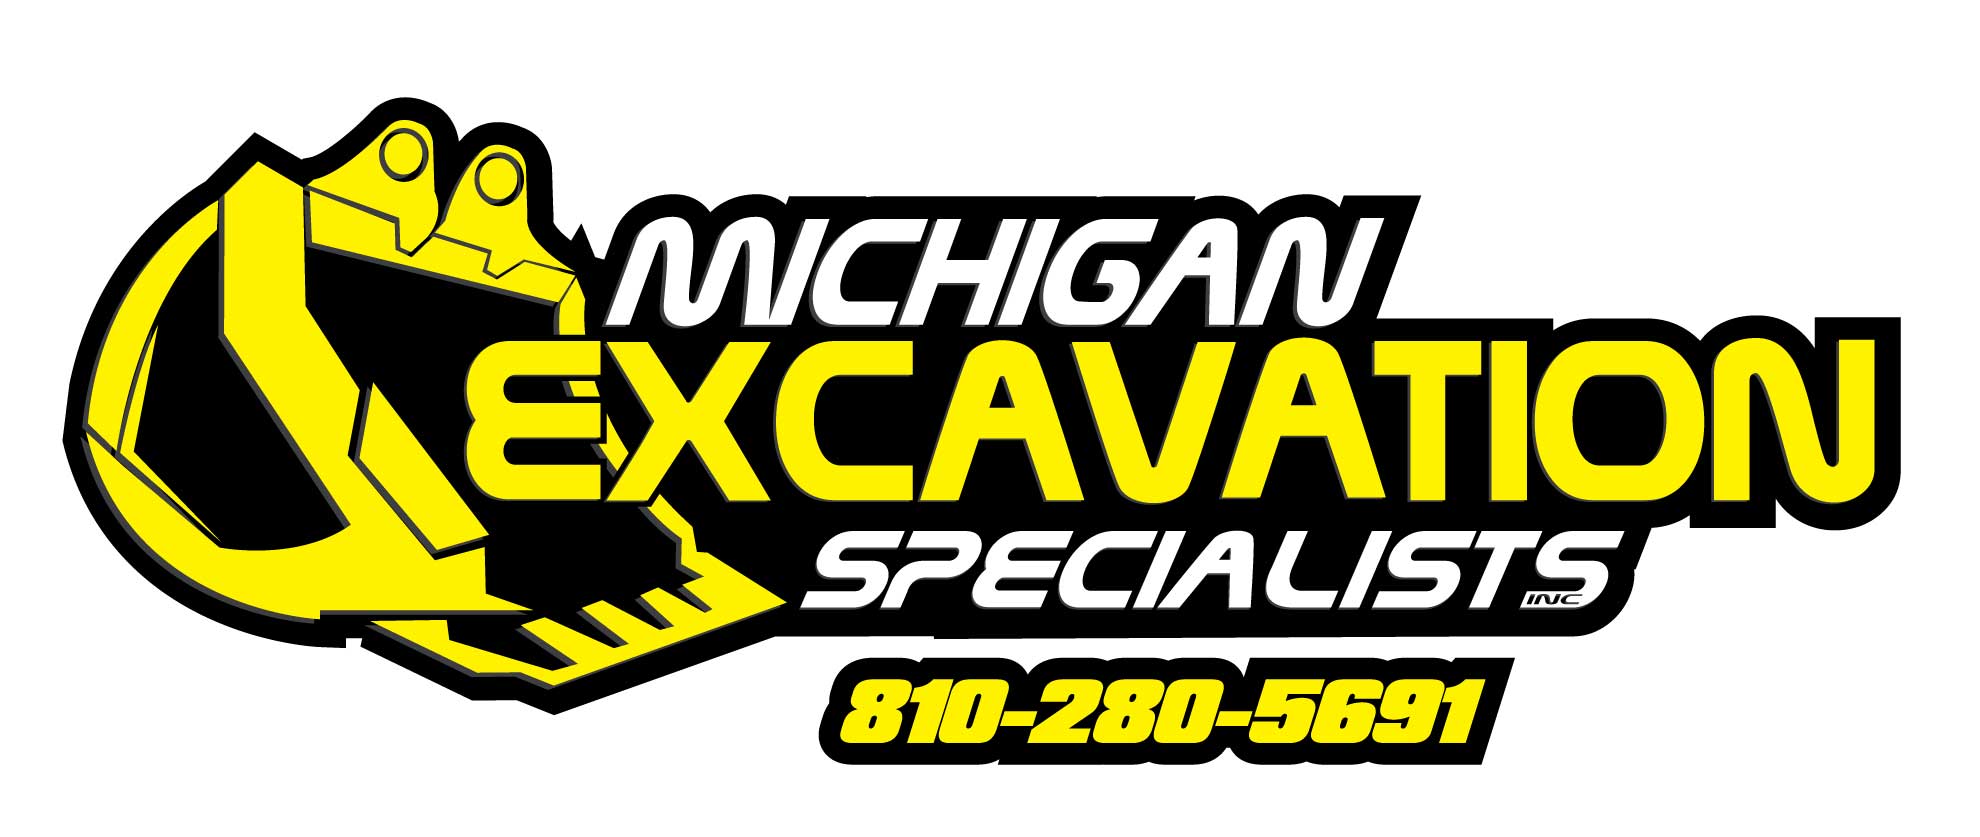 Michigan Excavation Specialists, Inc. Logo